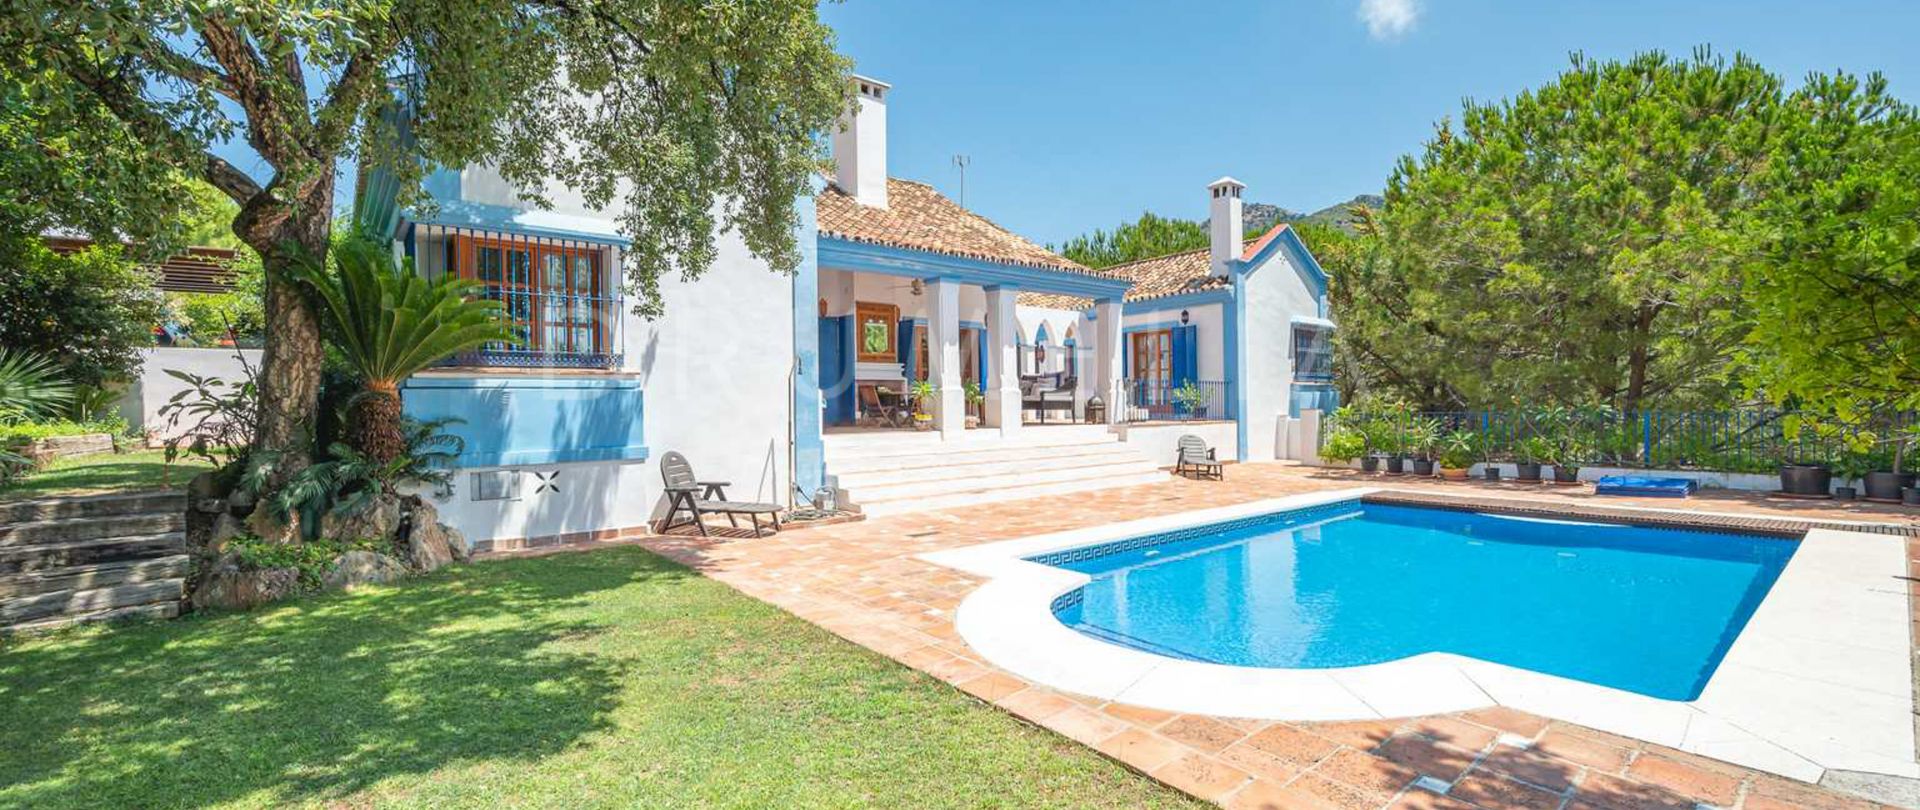 Charmante luxe villa in Andalusische stijl in Monte Mayor Alto, Benahavis